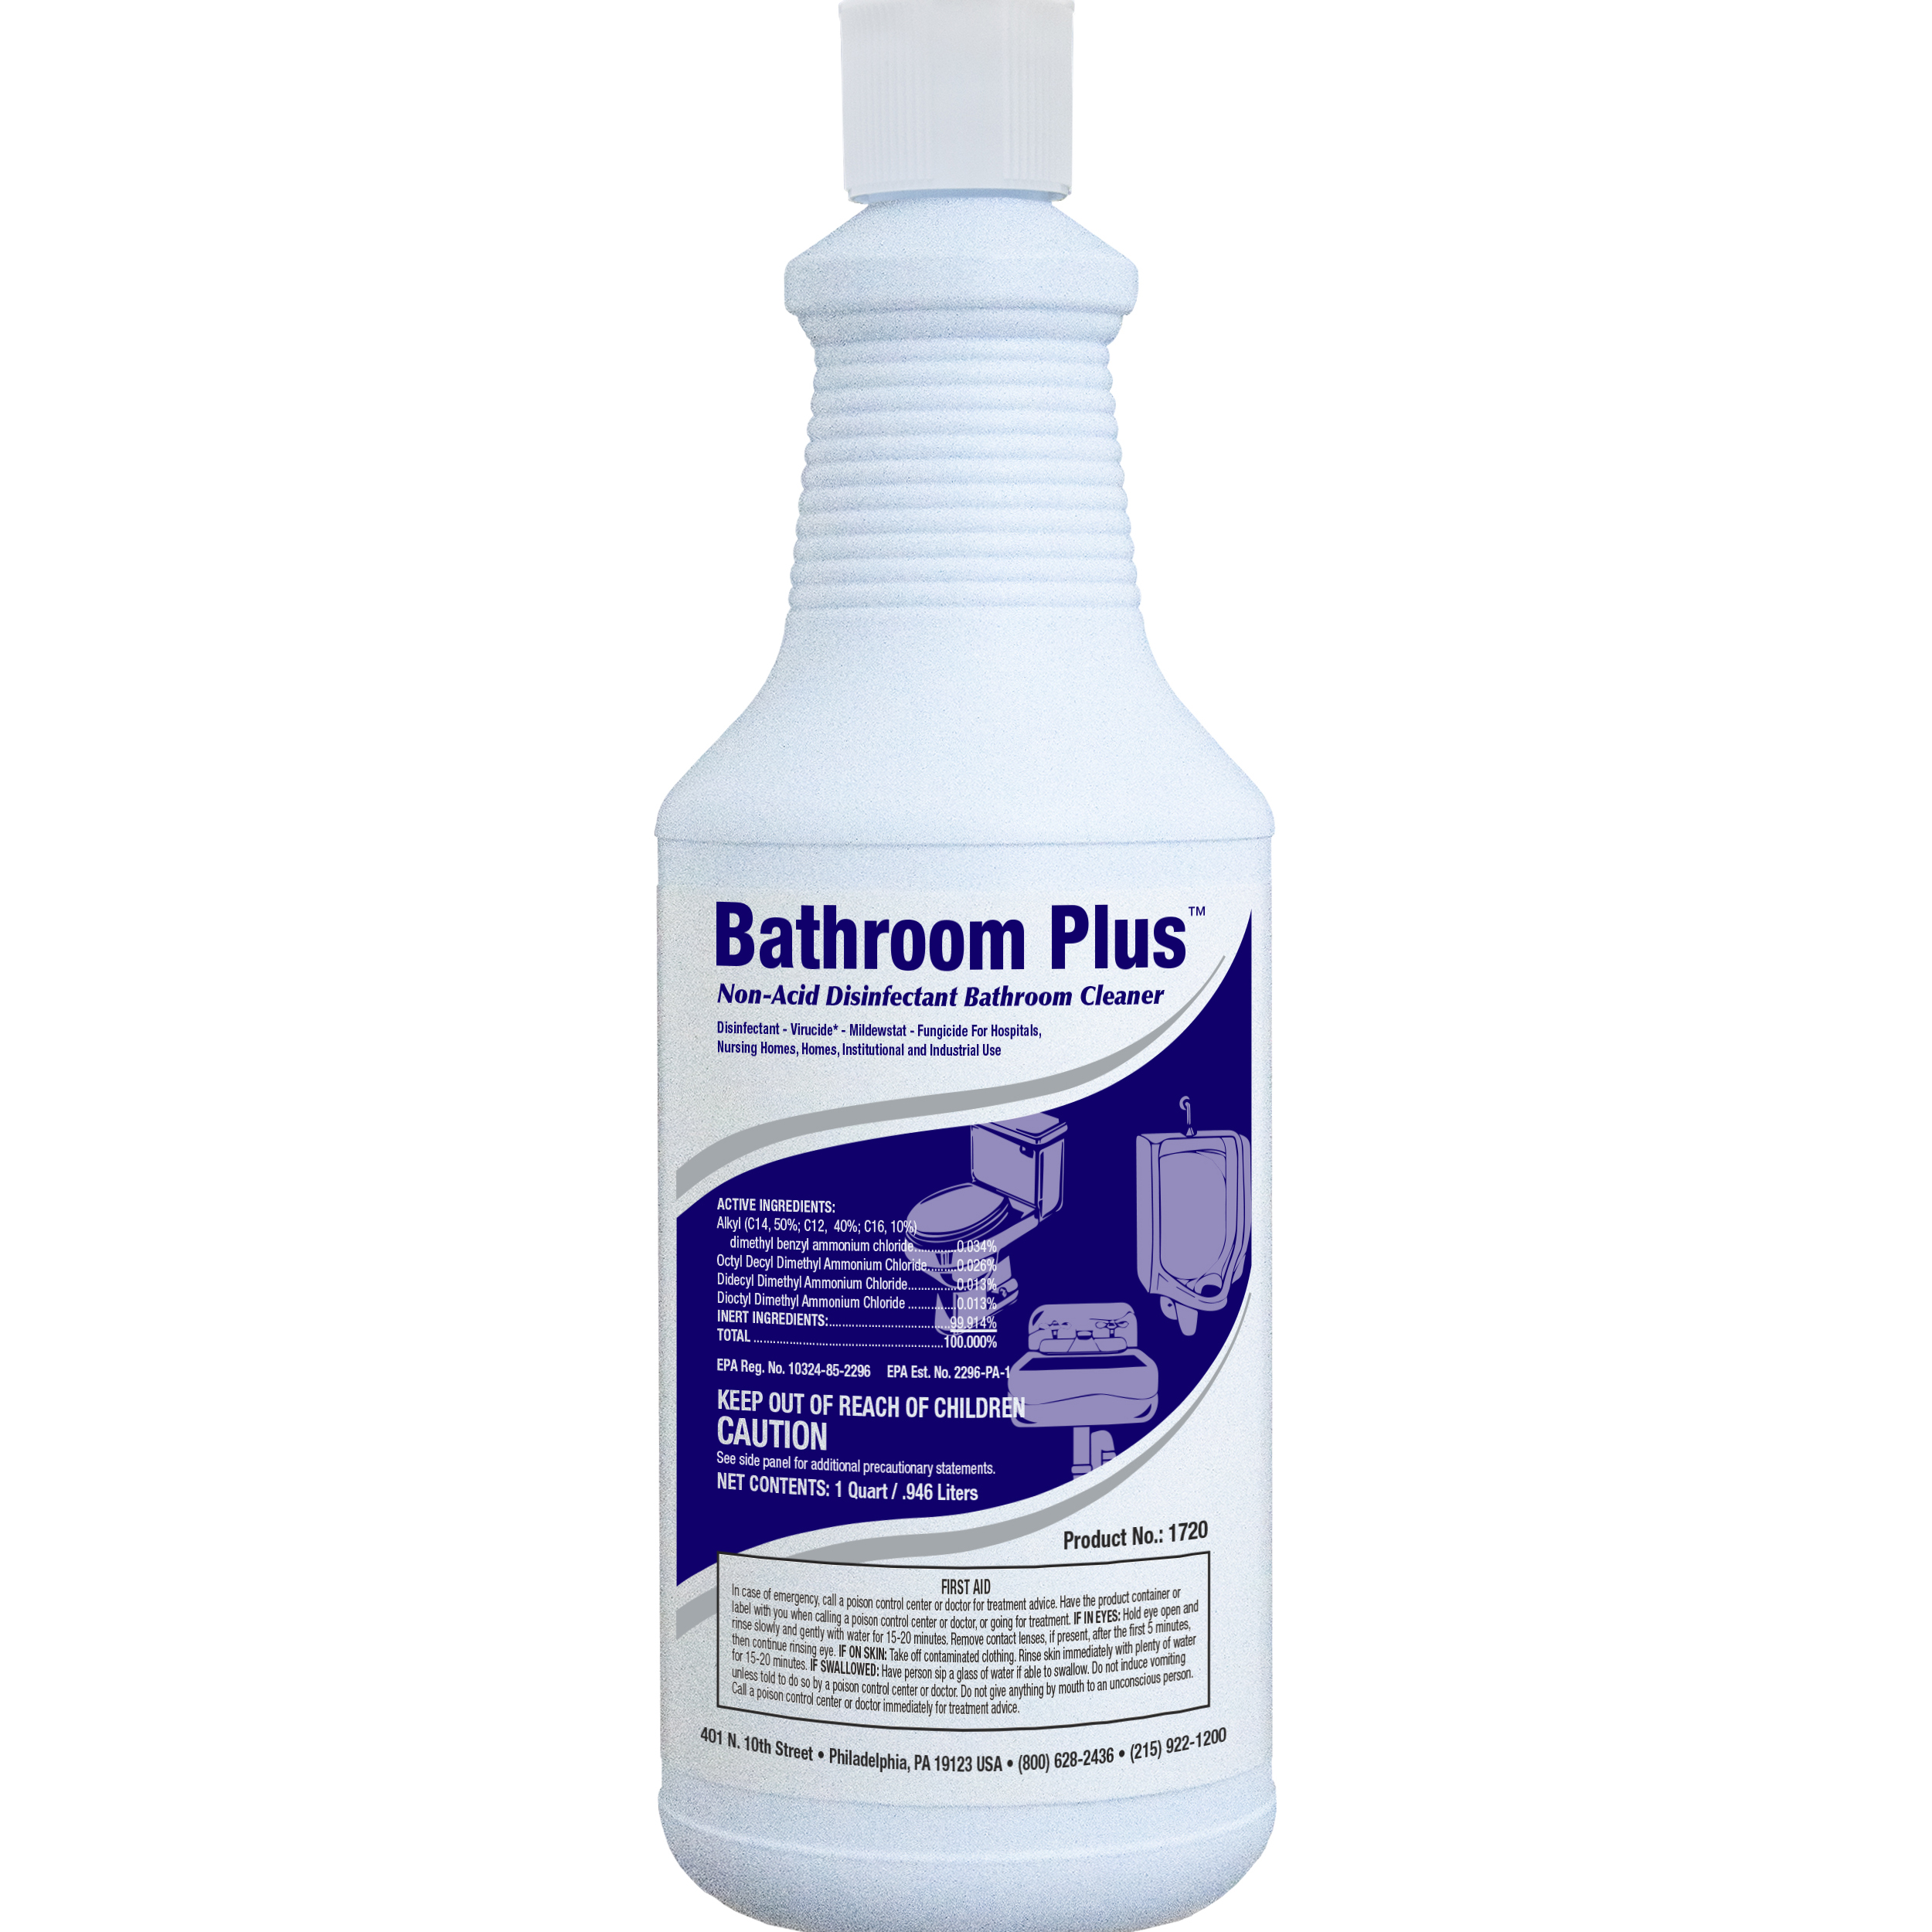  BATHROOM PLUS Non-Acid Disinfectant Bathroom Cleaner 12/32 oz (1 Qt.) Case (NCL1720-45) 